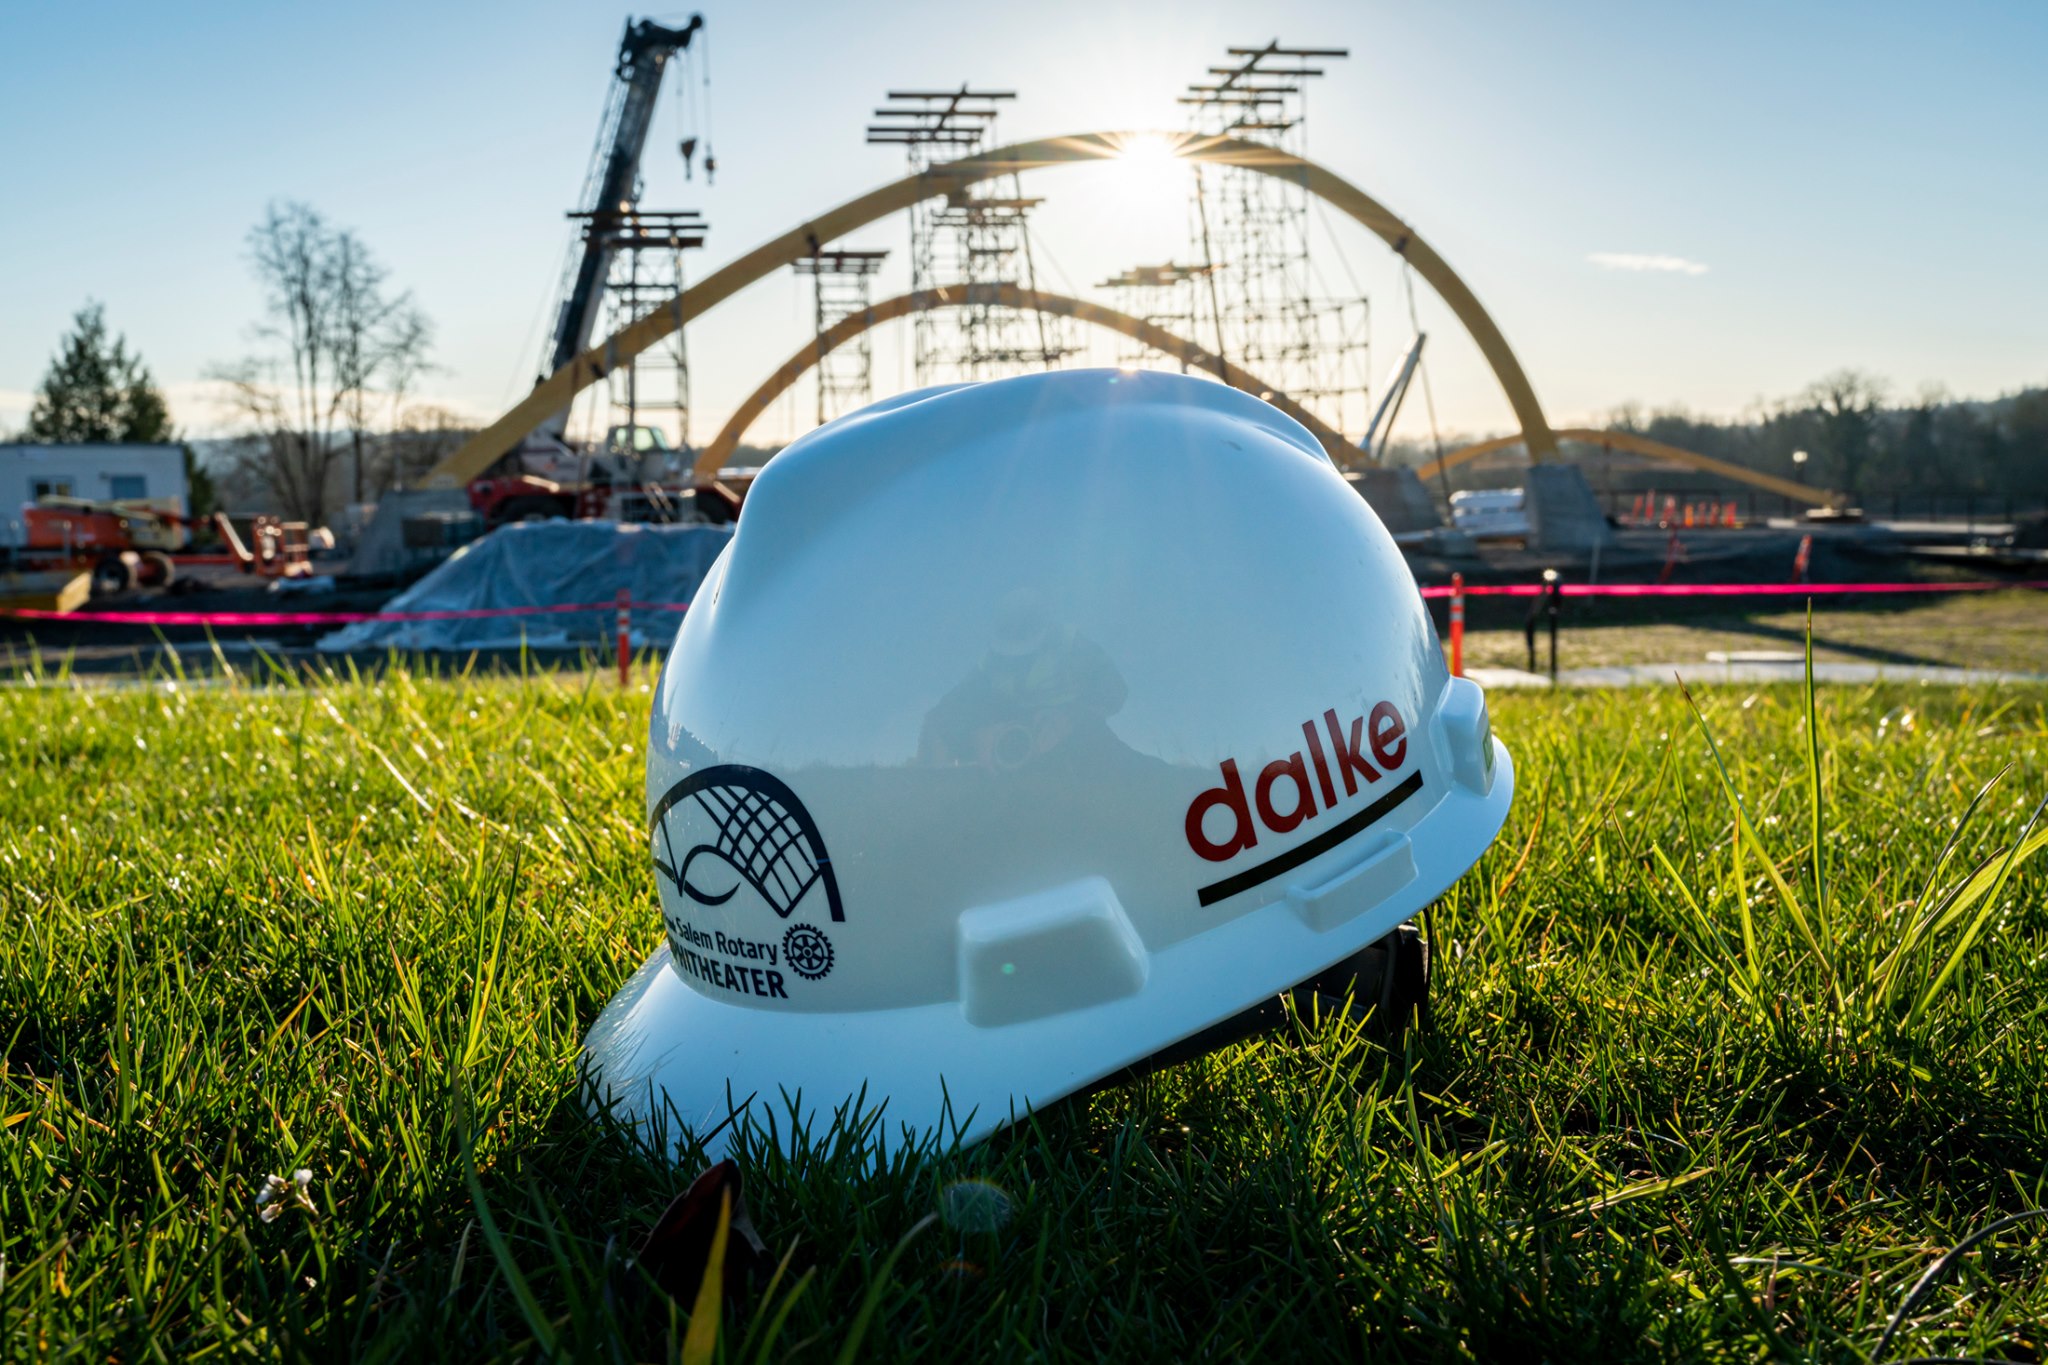 Dalke Construction Co Inc